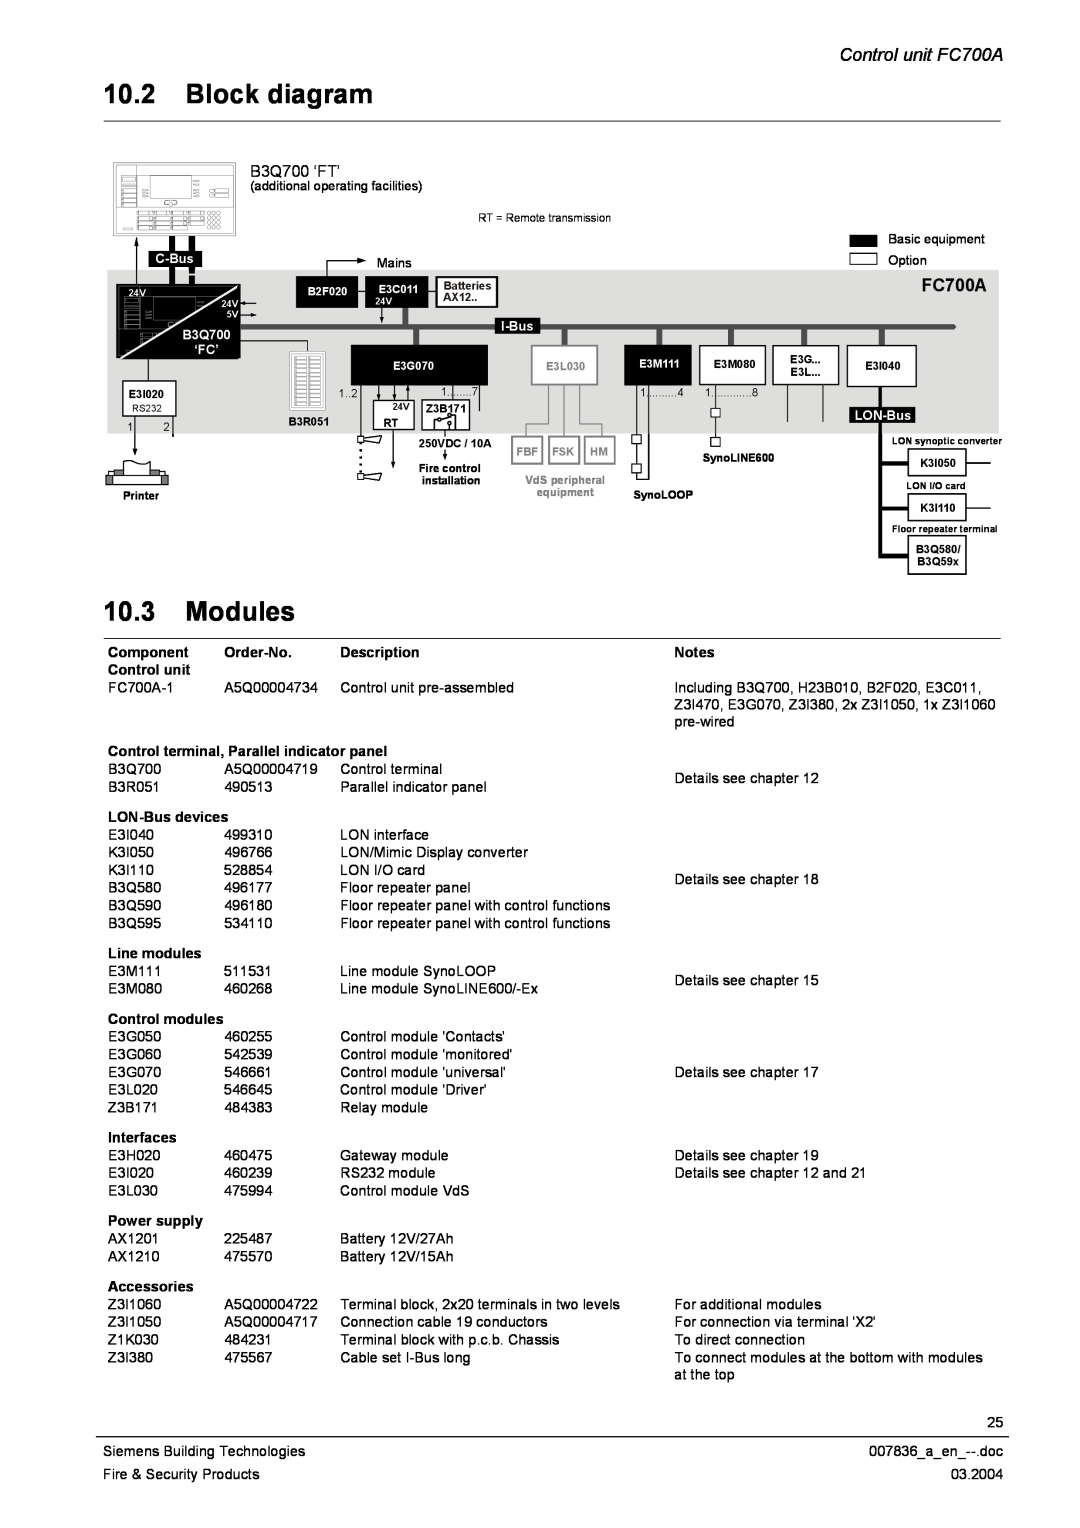 Siemens manual 10.2Block diagram, 10.3Modules, Control unit FC700A 